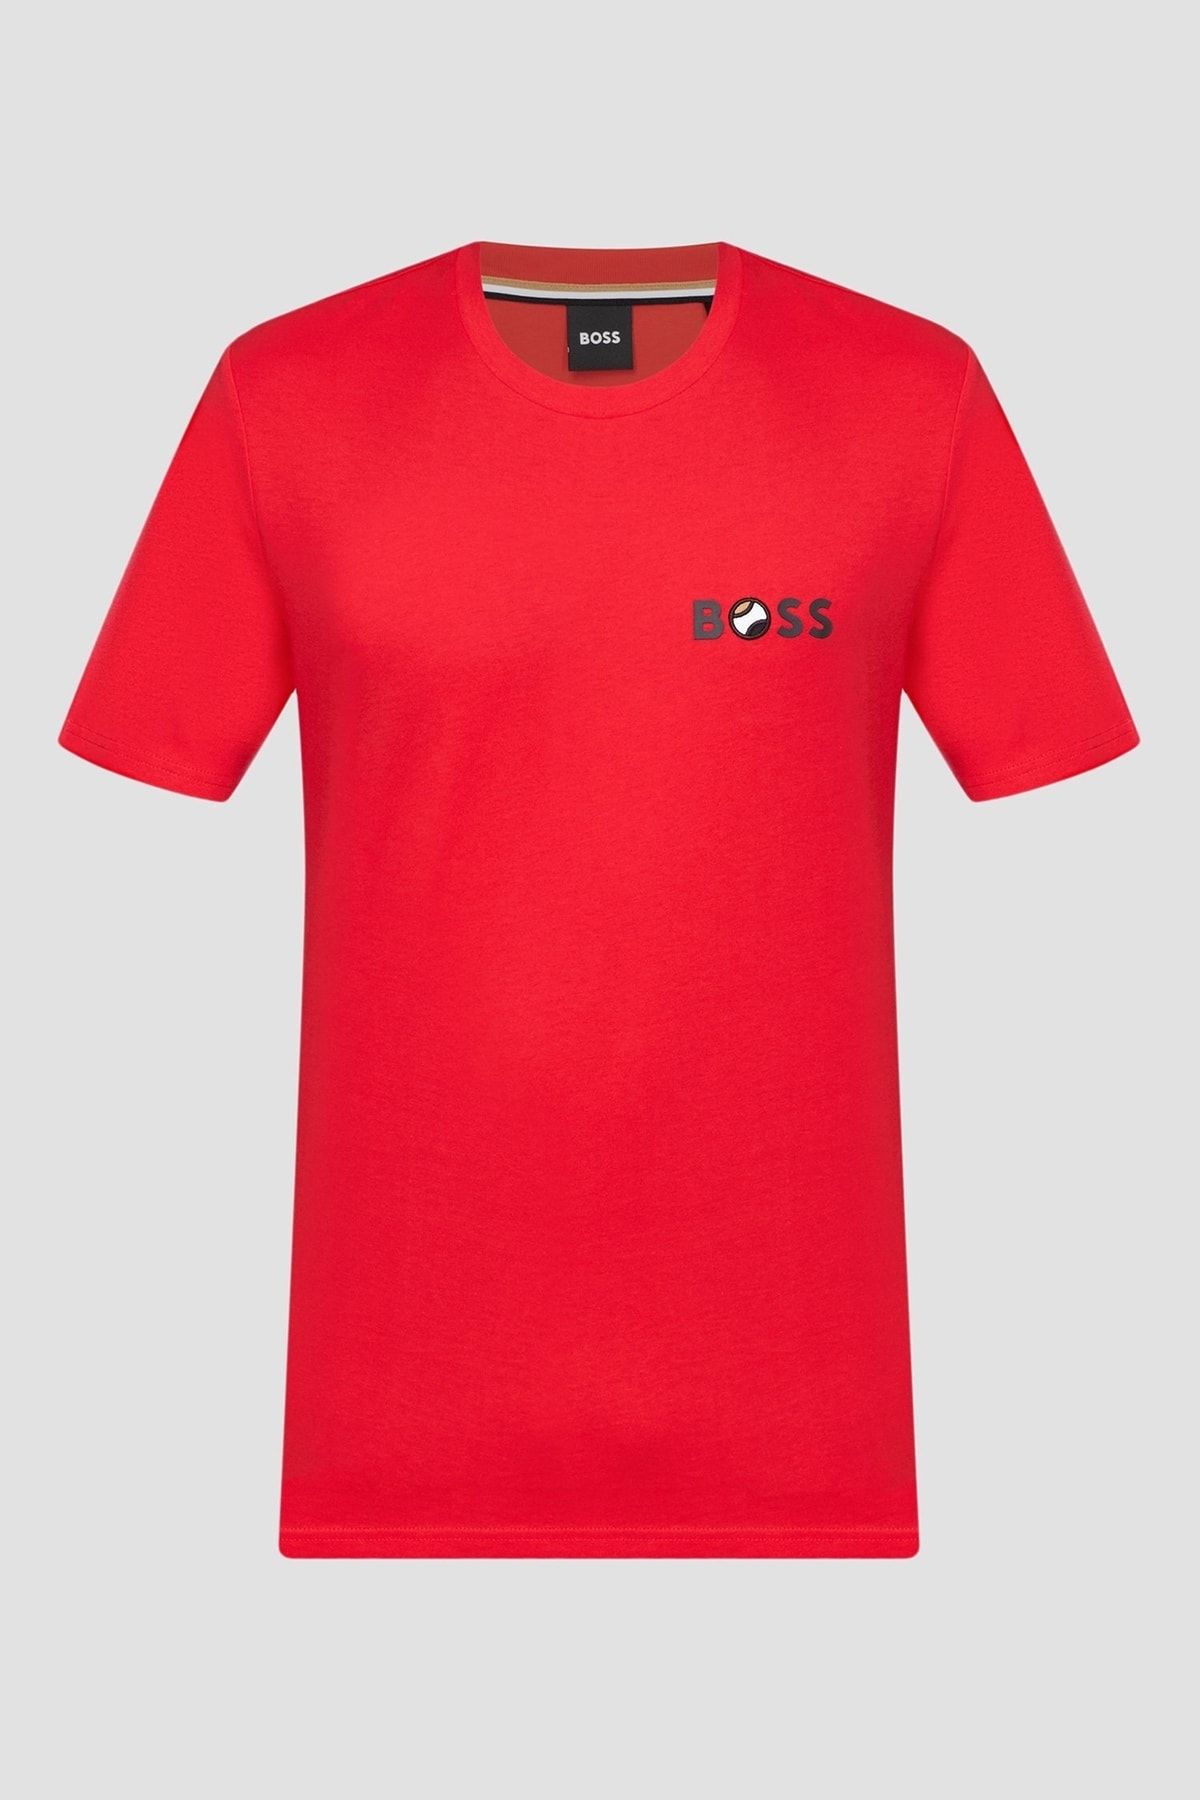 BOSS Erkek Regular Fit Kısa Kollu Düz Bisiklet Yaka Kırmızı T-shirt 50489420-628